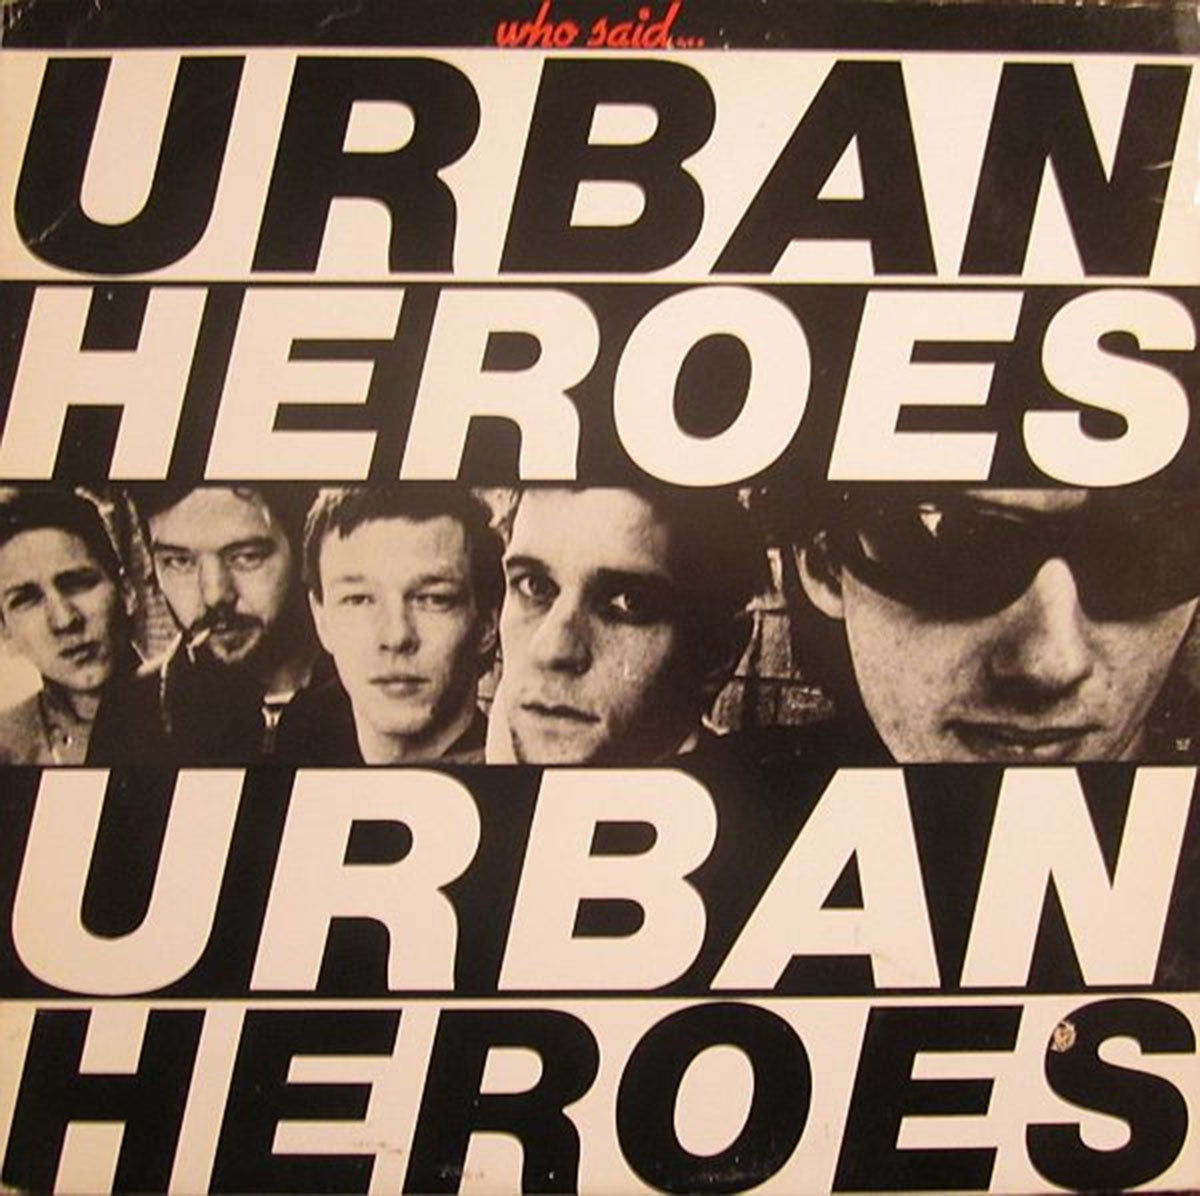 Urban Heroes – Who Said... Urban Heroes